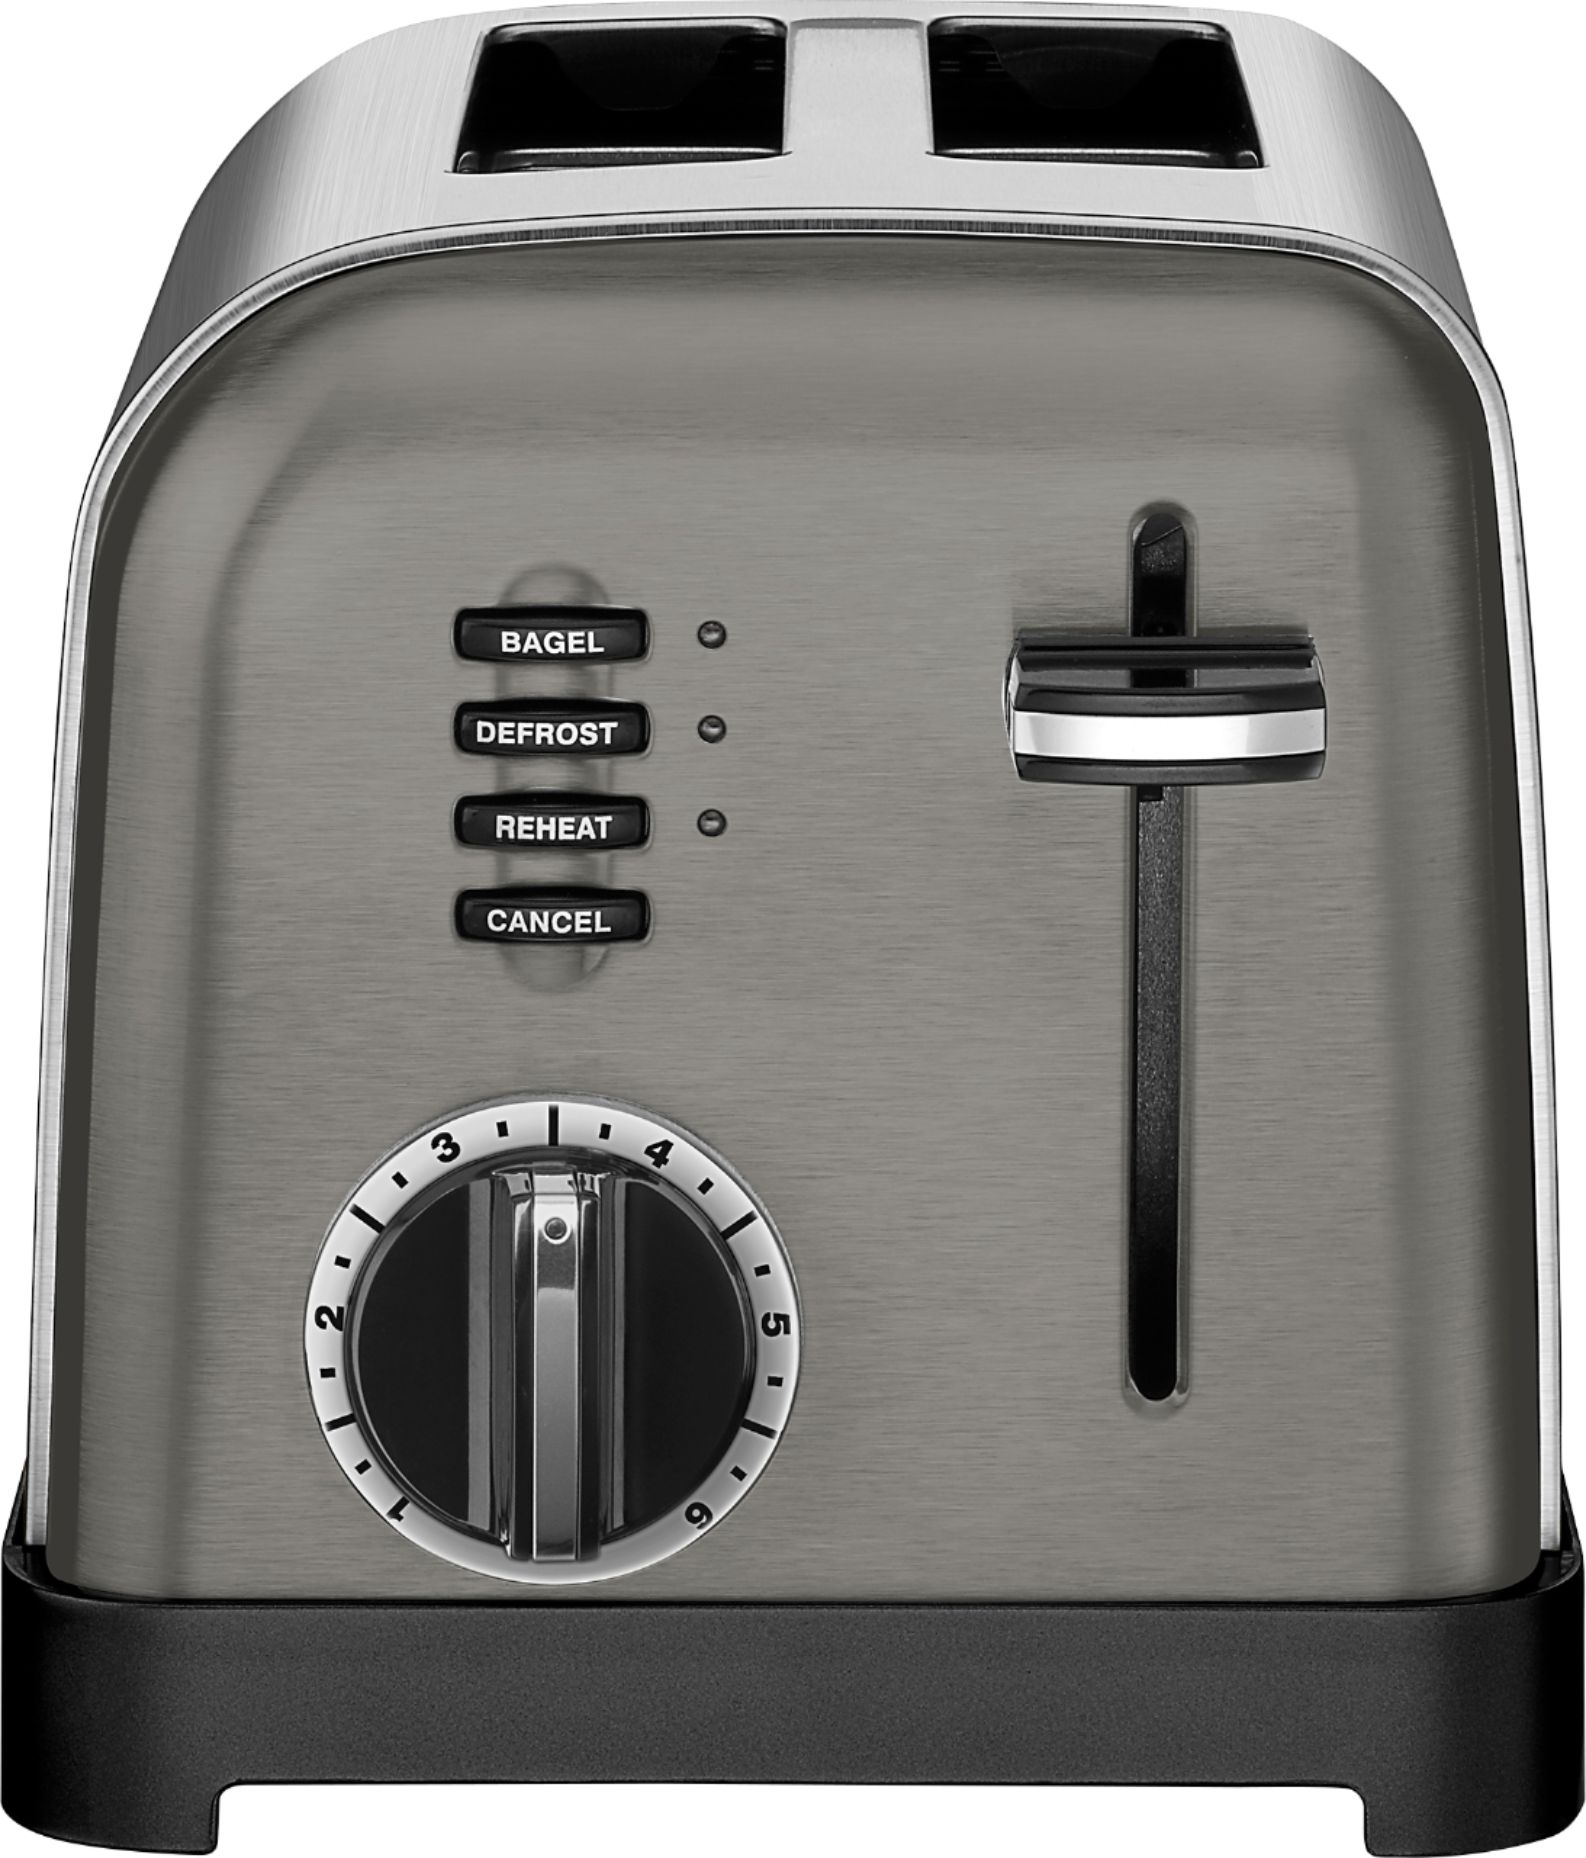 Cuisinart Classic 2-Slice Wide-Slot Toaster Black/Stainless CPT-160BKS -  Best Buy